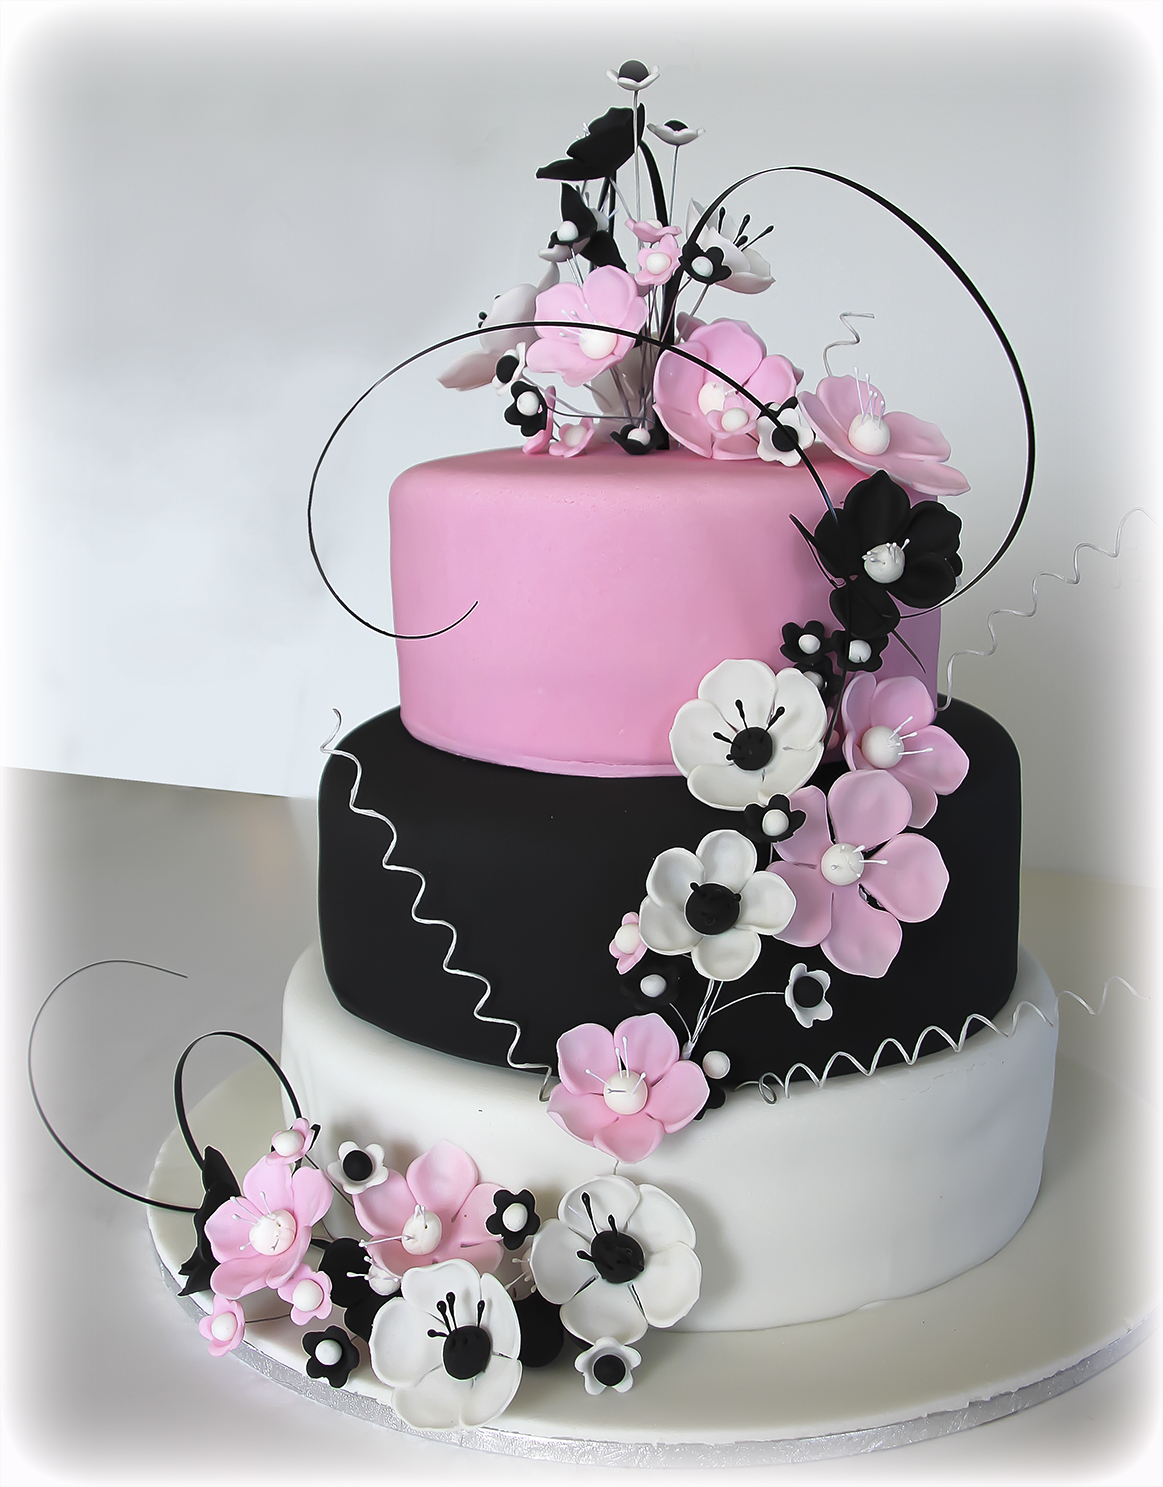 Pink Black and White Wedding Cake